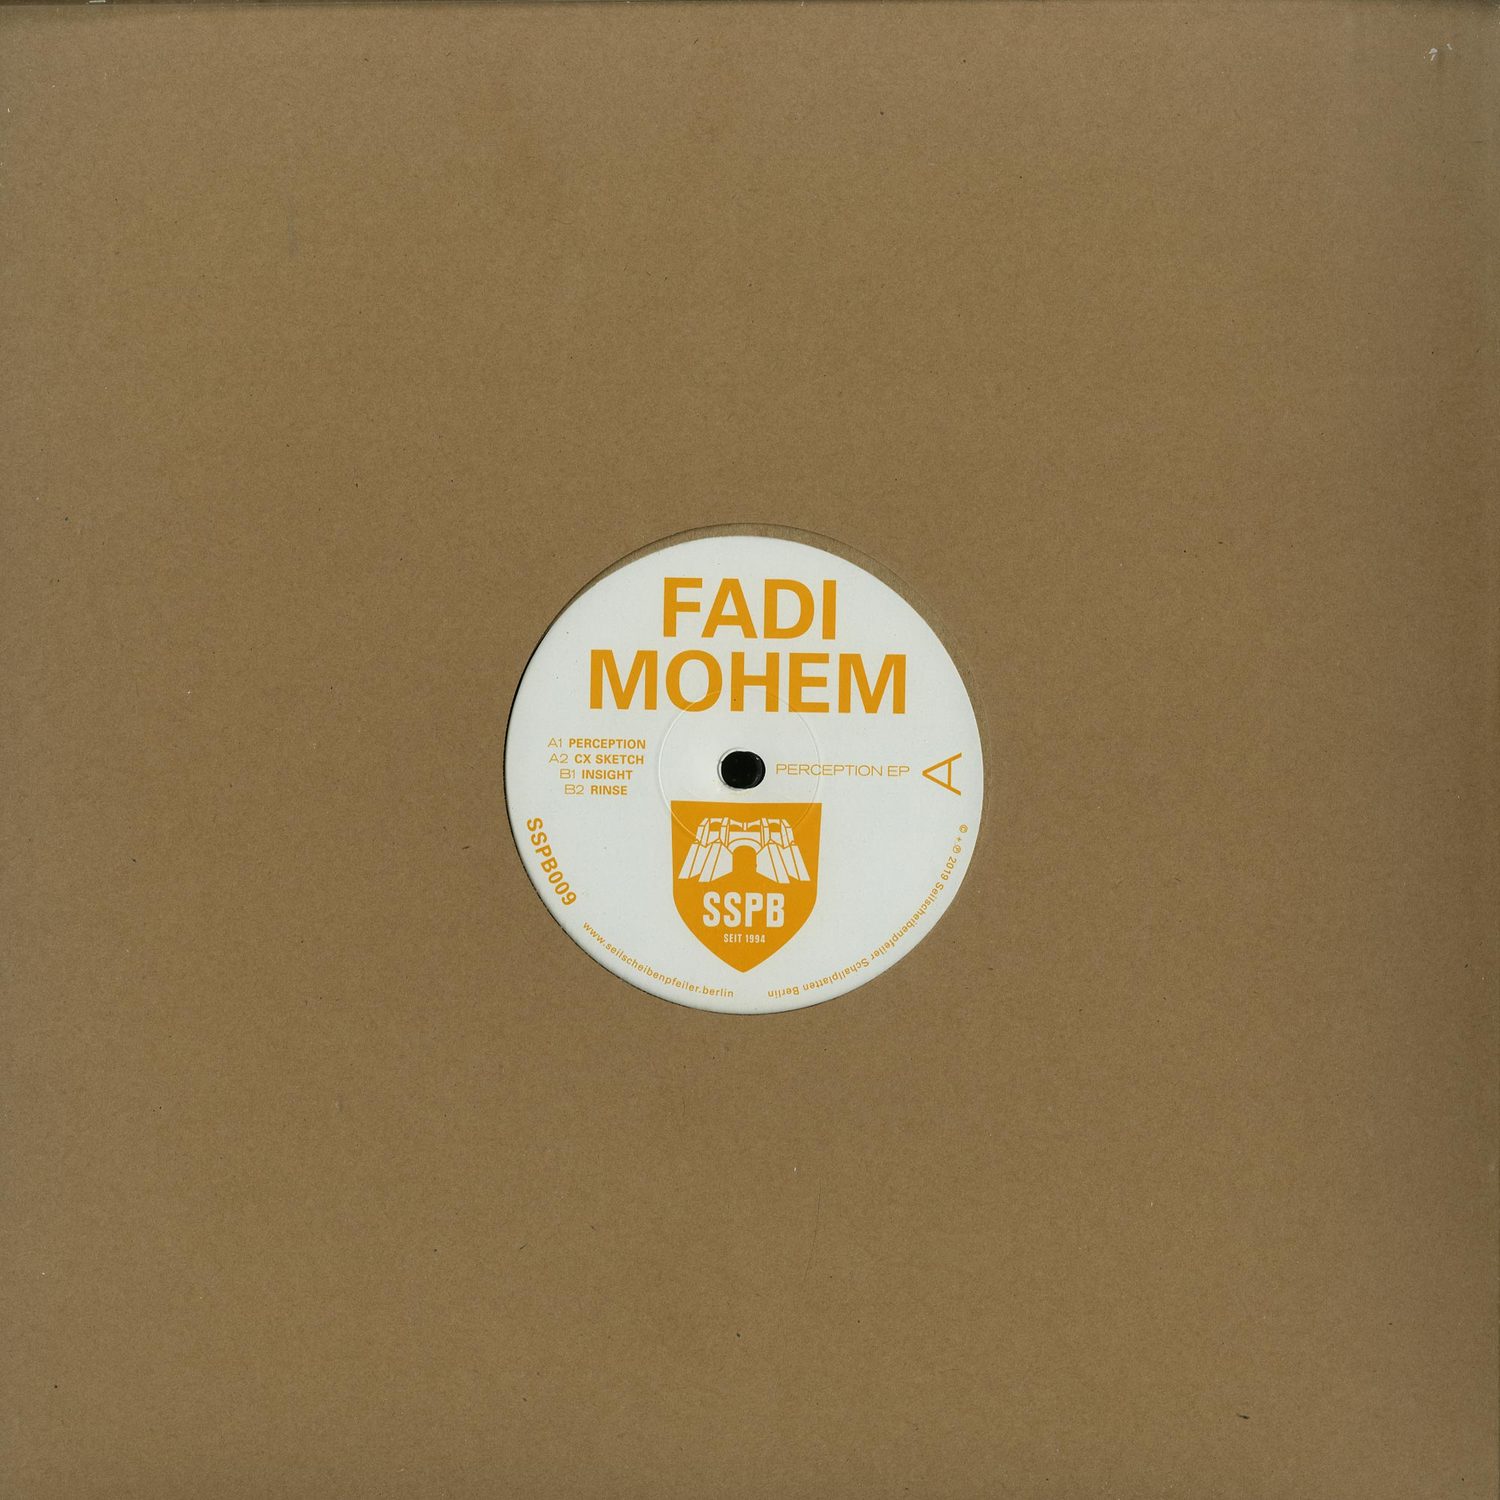 Fadi Mohem - PERCEPTION EP